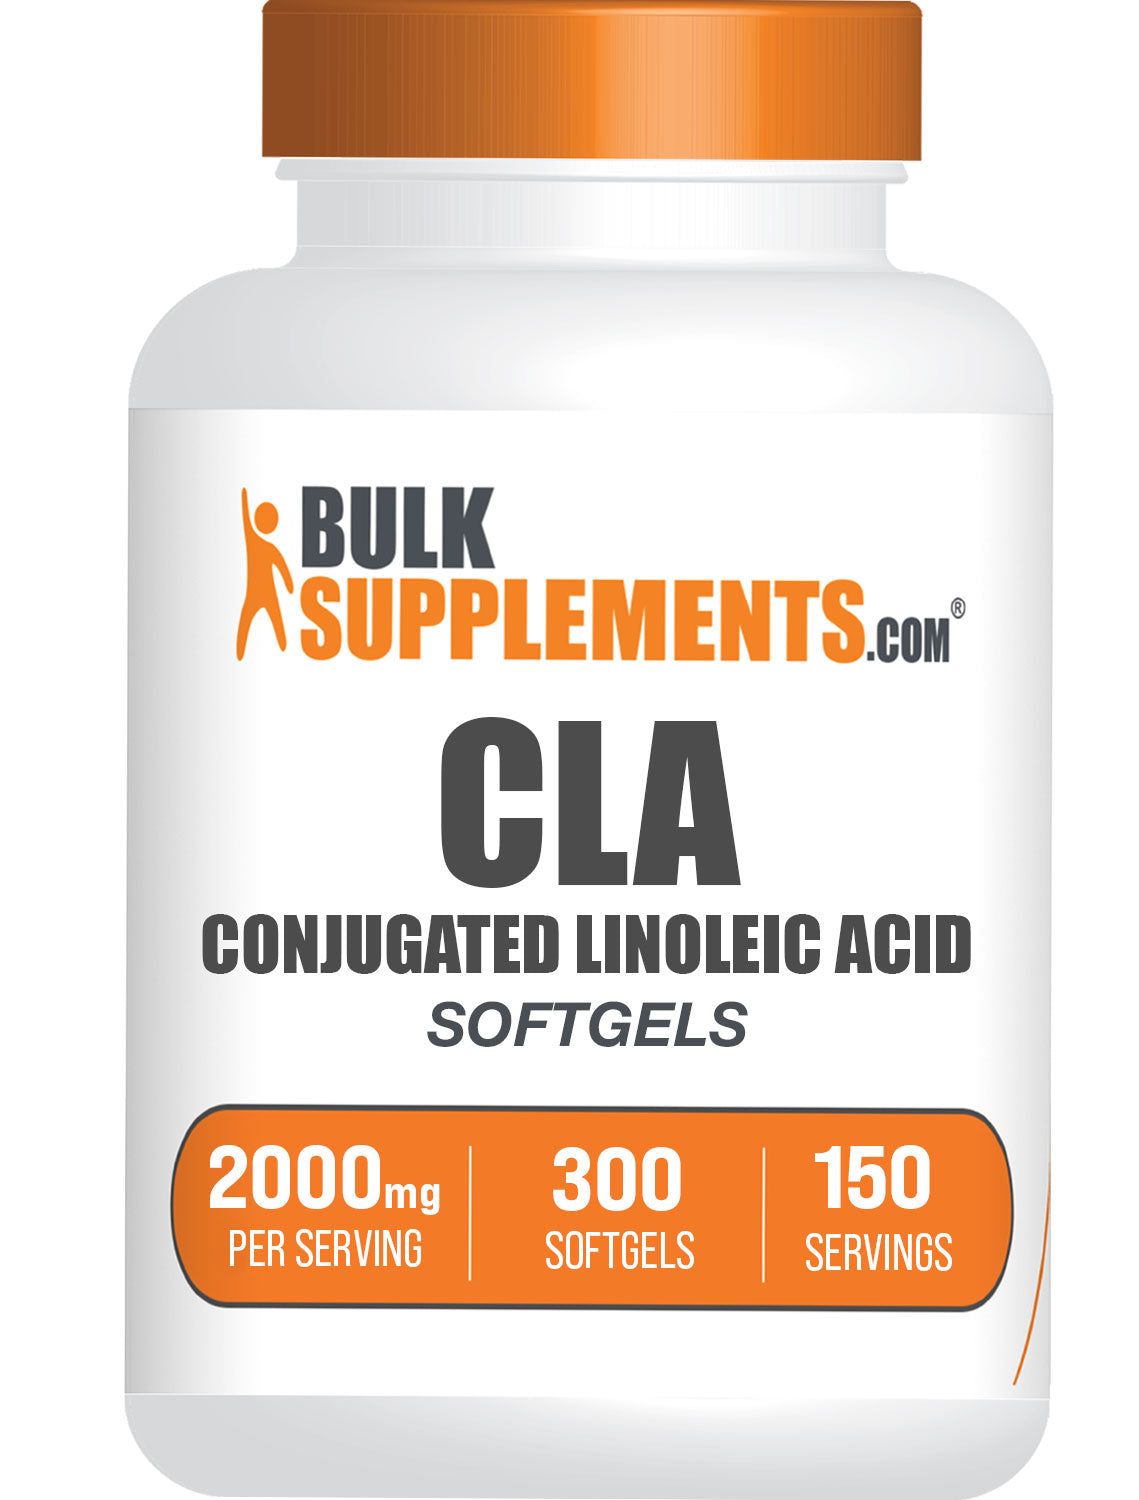 cla supplements